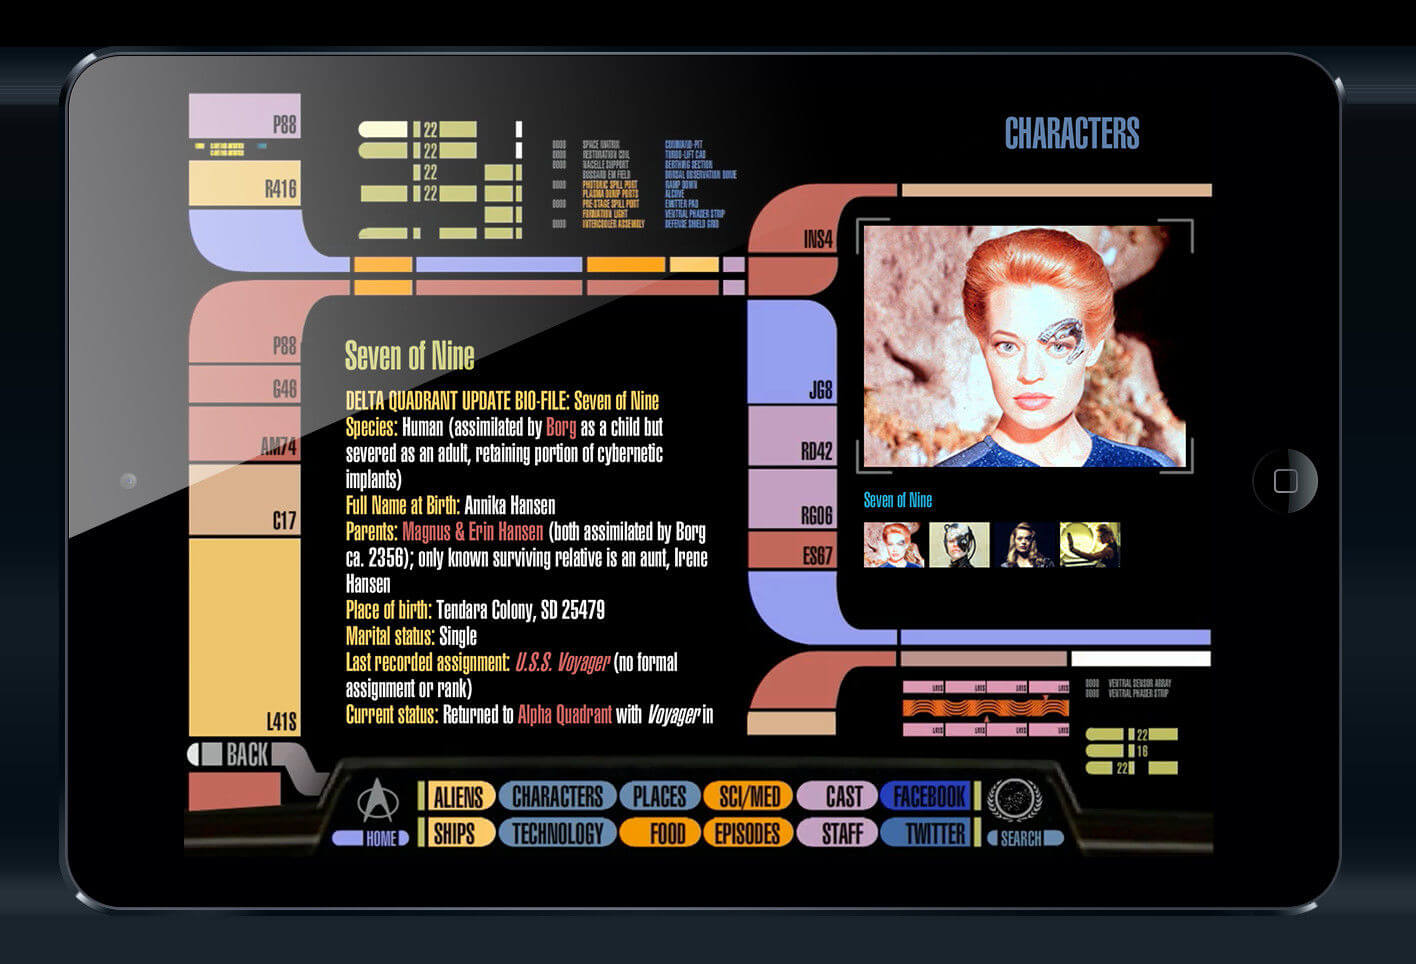 Star Trek PADD iPad app created by ArcTouch app developers